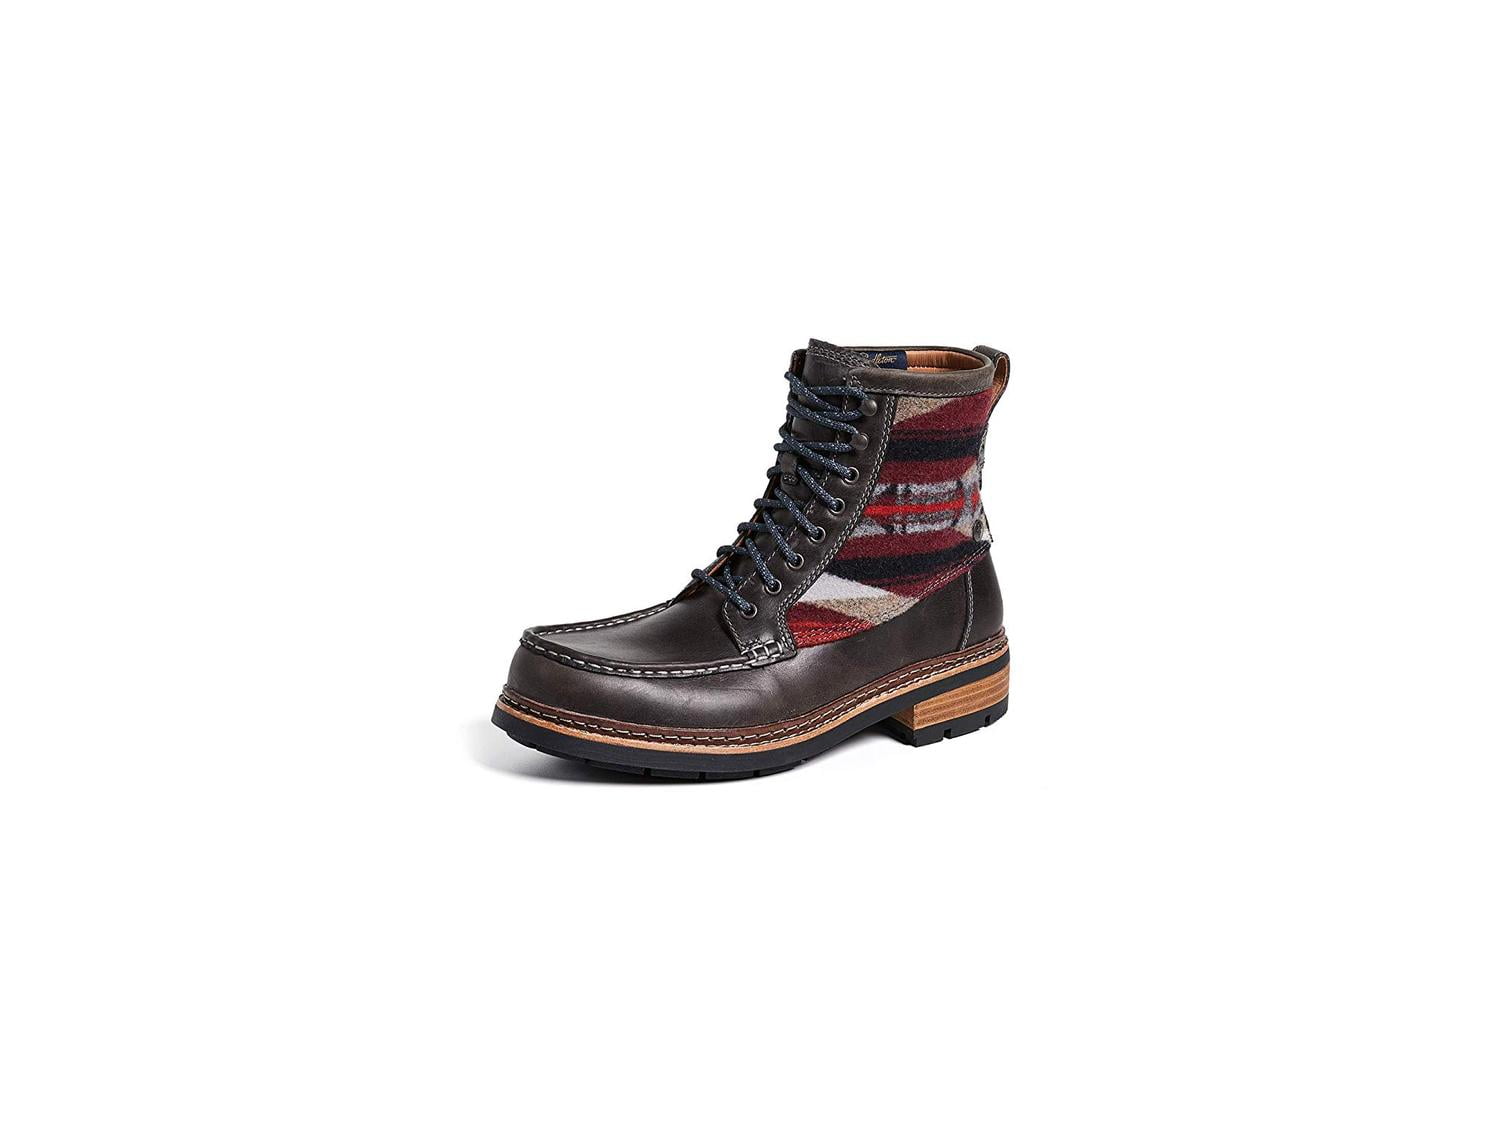 clarks ottawa peak boots